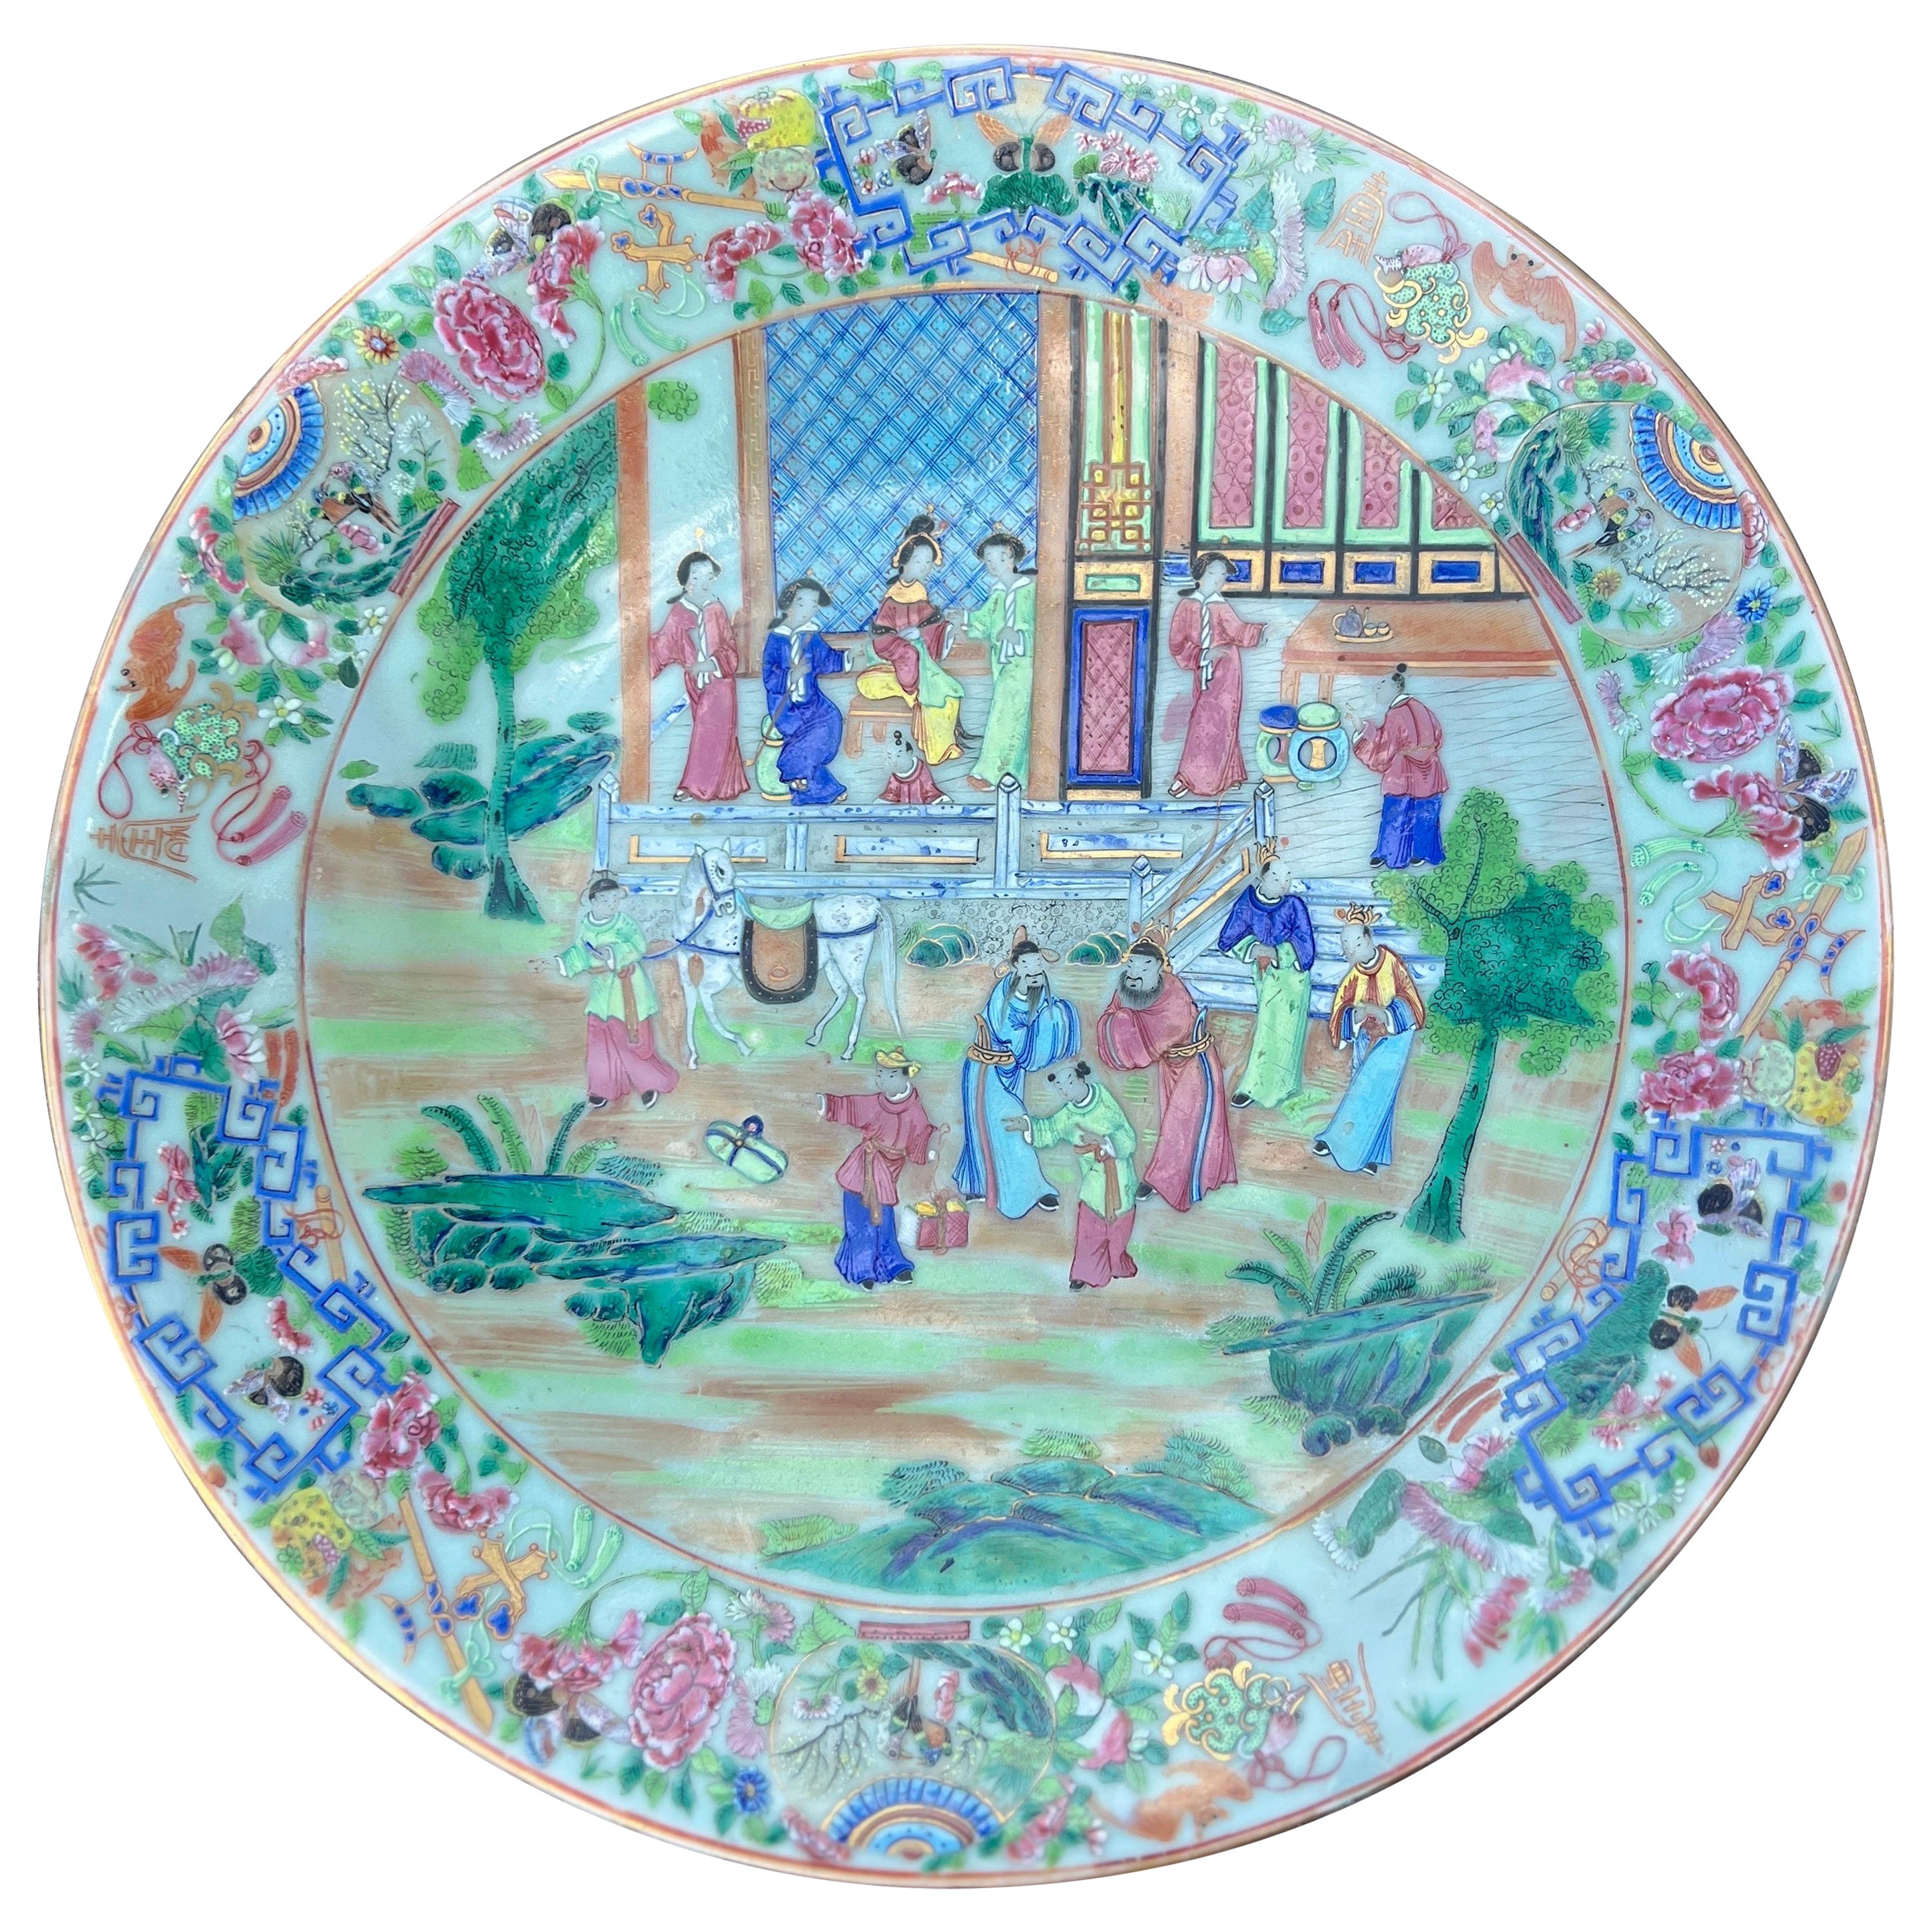 19th Century Chinese Export Rose Medallion Platter on Celadon Ground